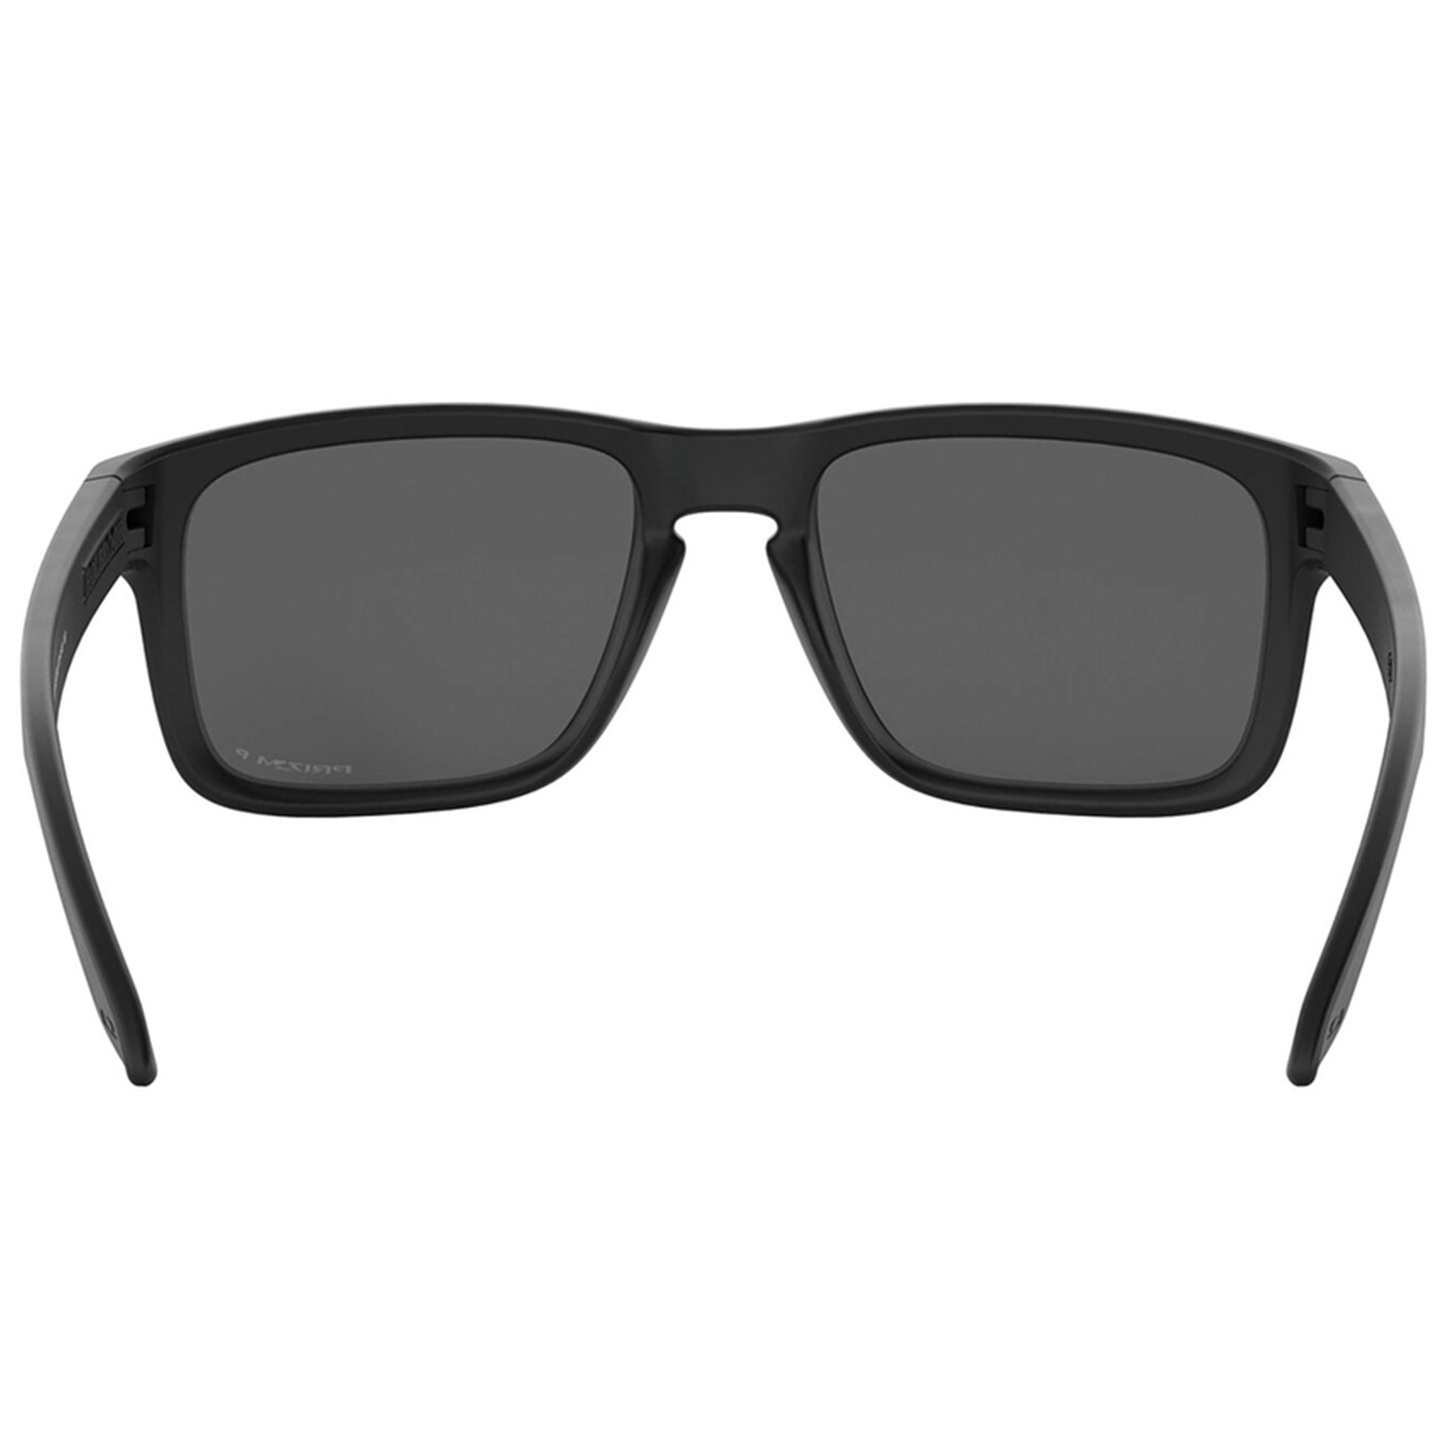 Oakley Holbrook Sunglasses (Matte Black) Prizm Black Polarized Lens - Free Case